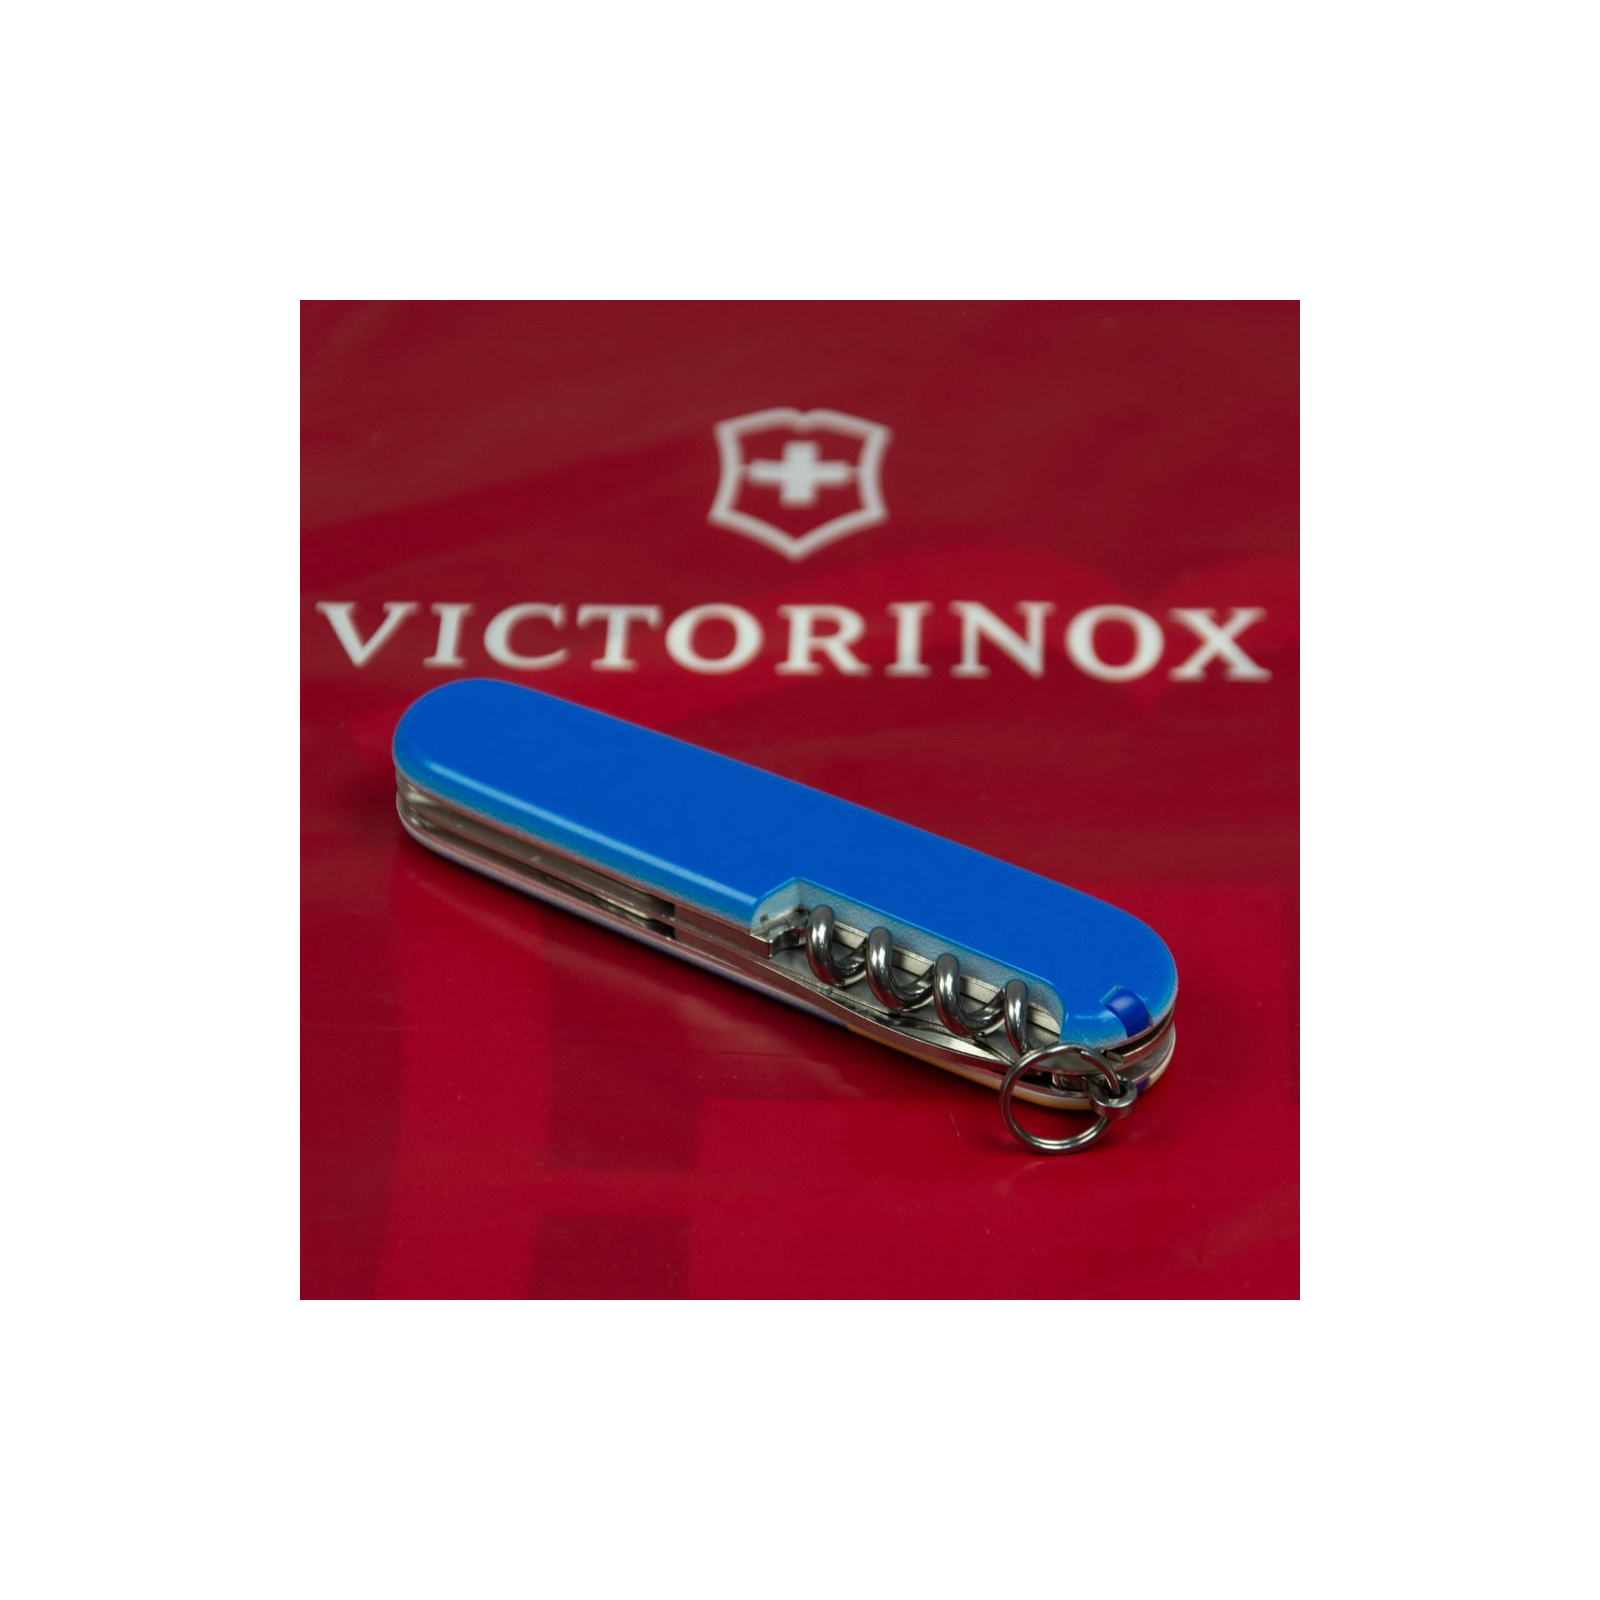 Нож Victorinox Spartan Ukraine 91 мм Жовто-синій малюнок (1.3603.7_T3100p) изображение 4